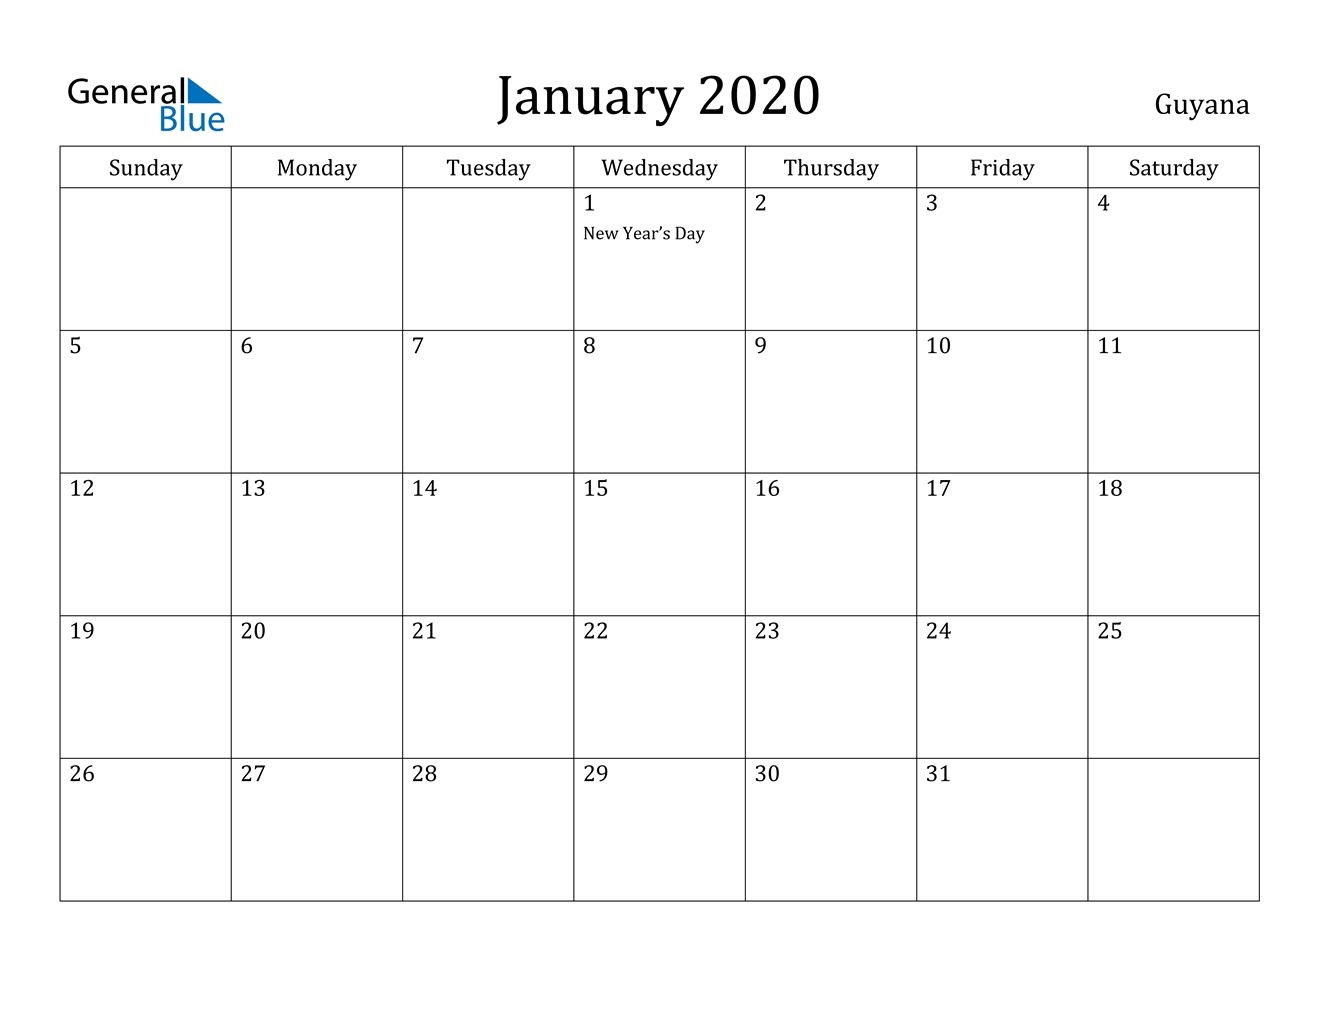 January 2020 Calendar - Guyana December 2020 January 2021 Calendar Word